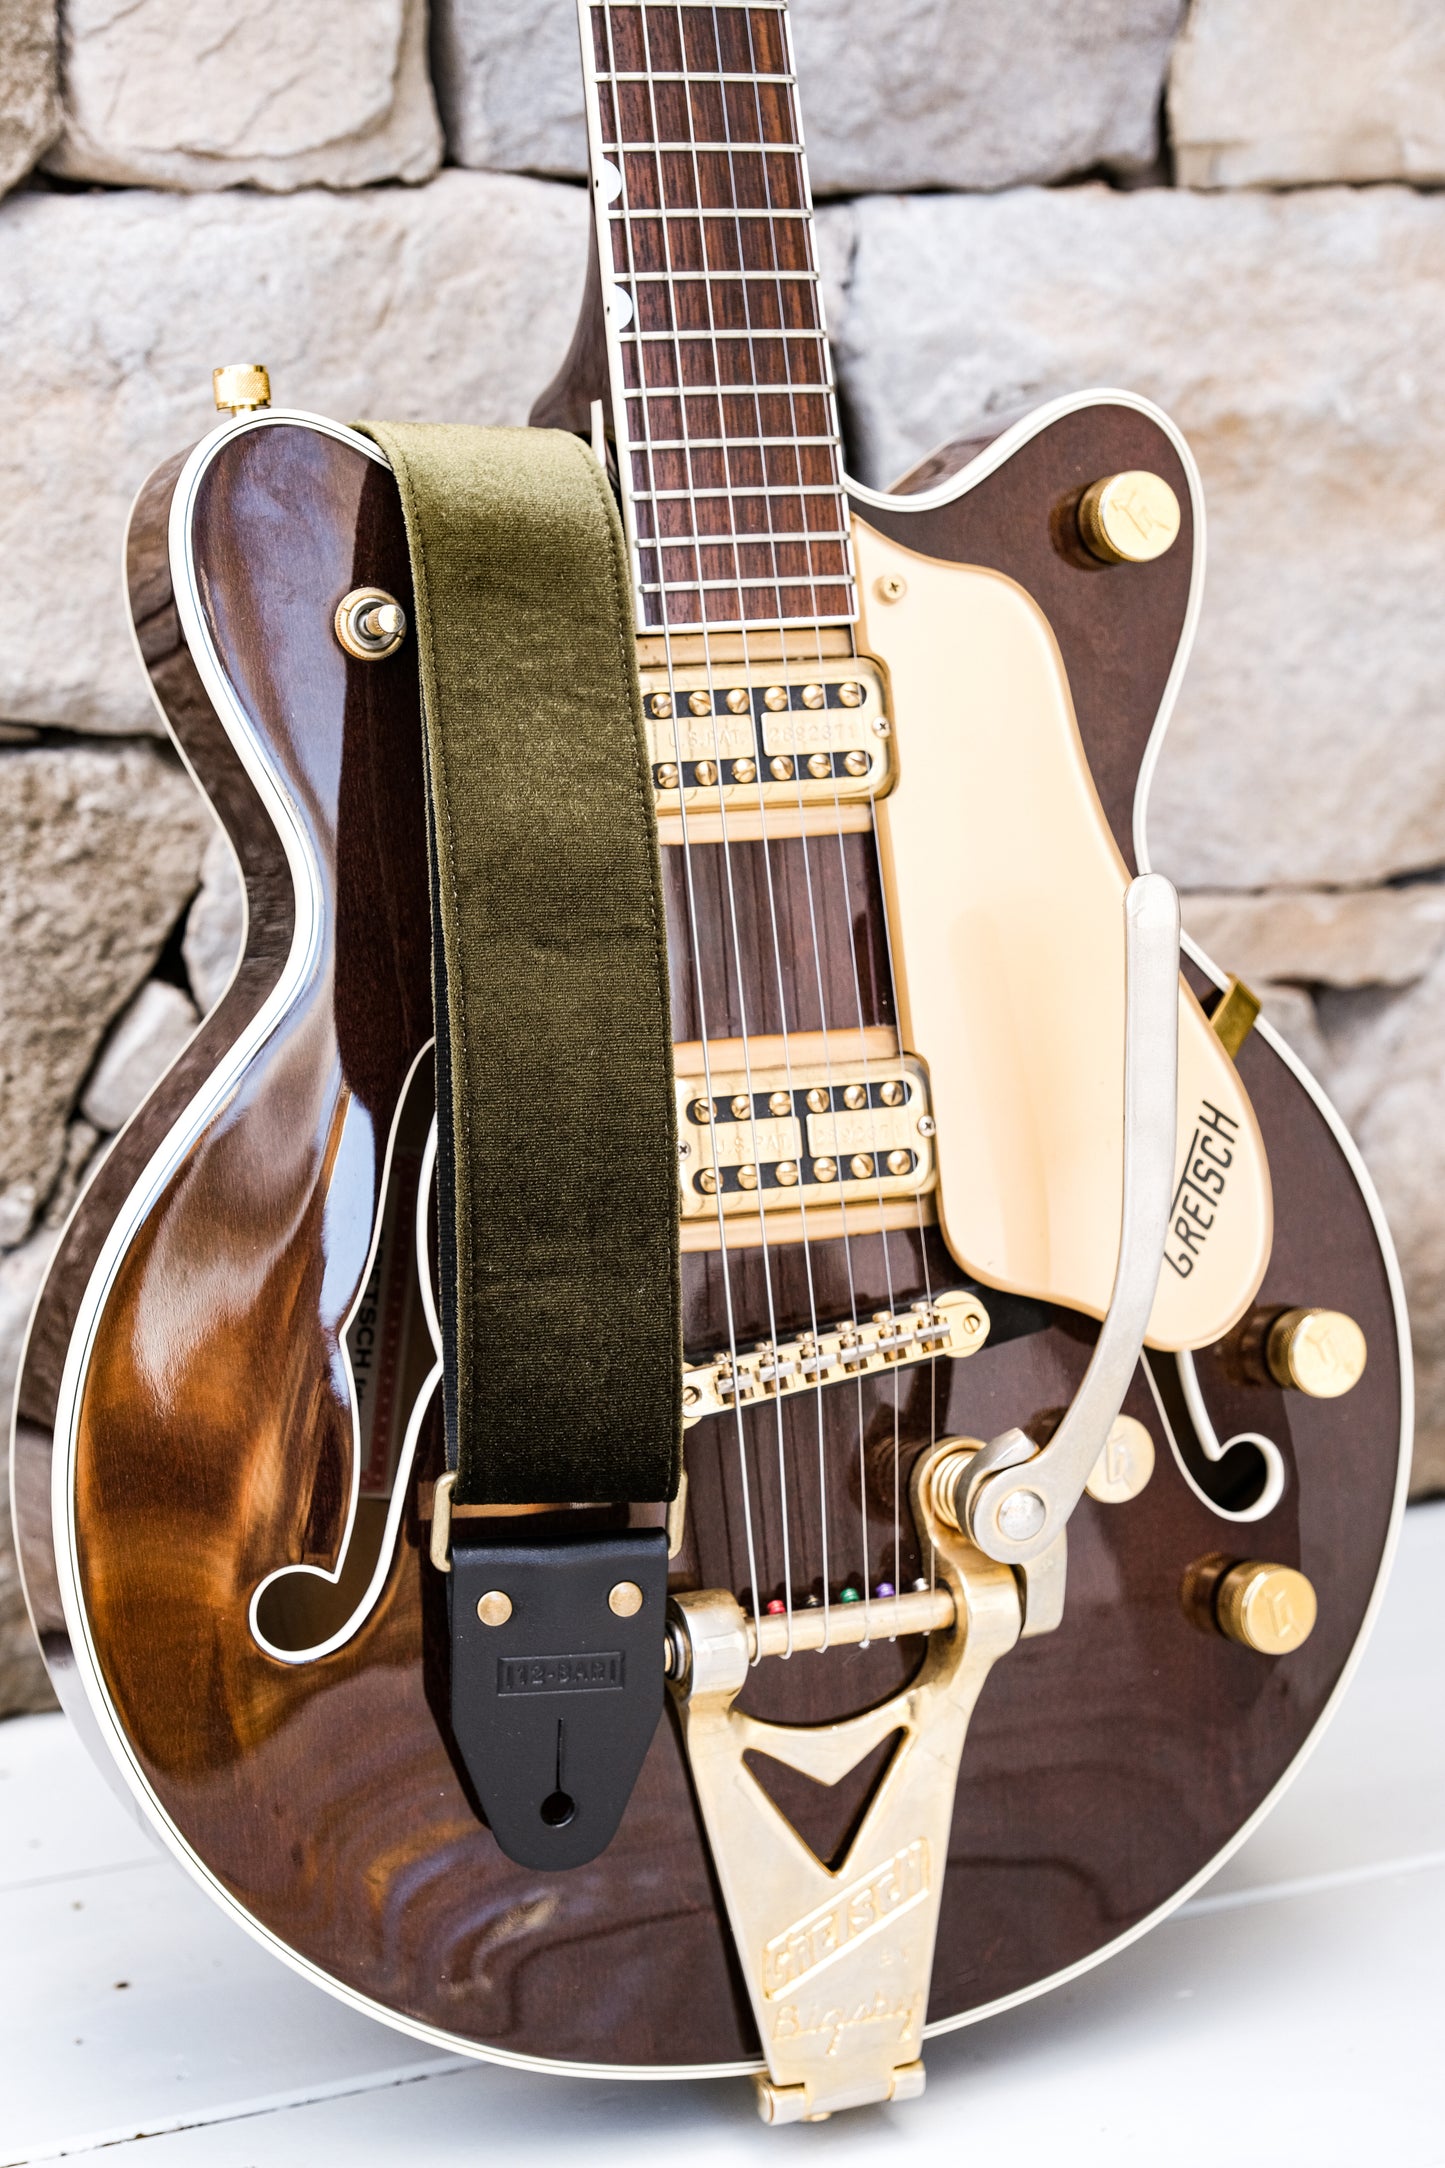 Greenback velvet vintage retro guitar strap